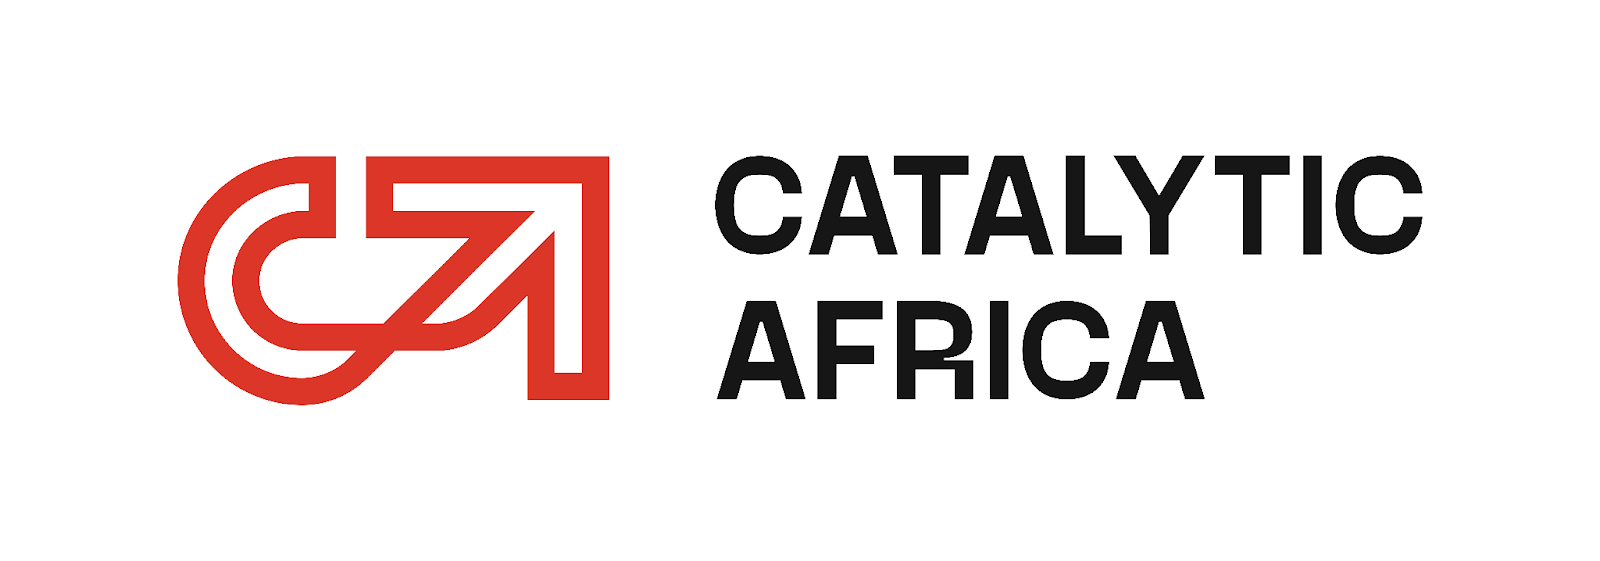 catalytic africa